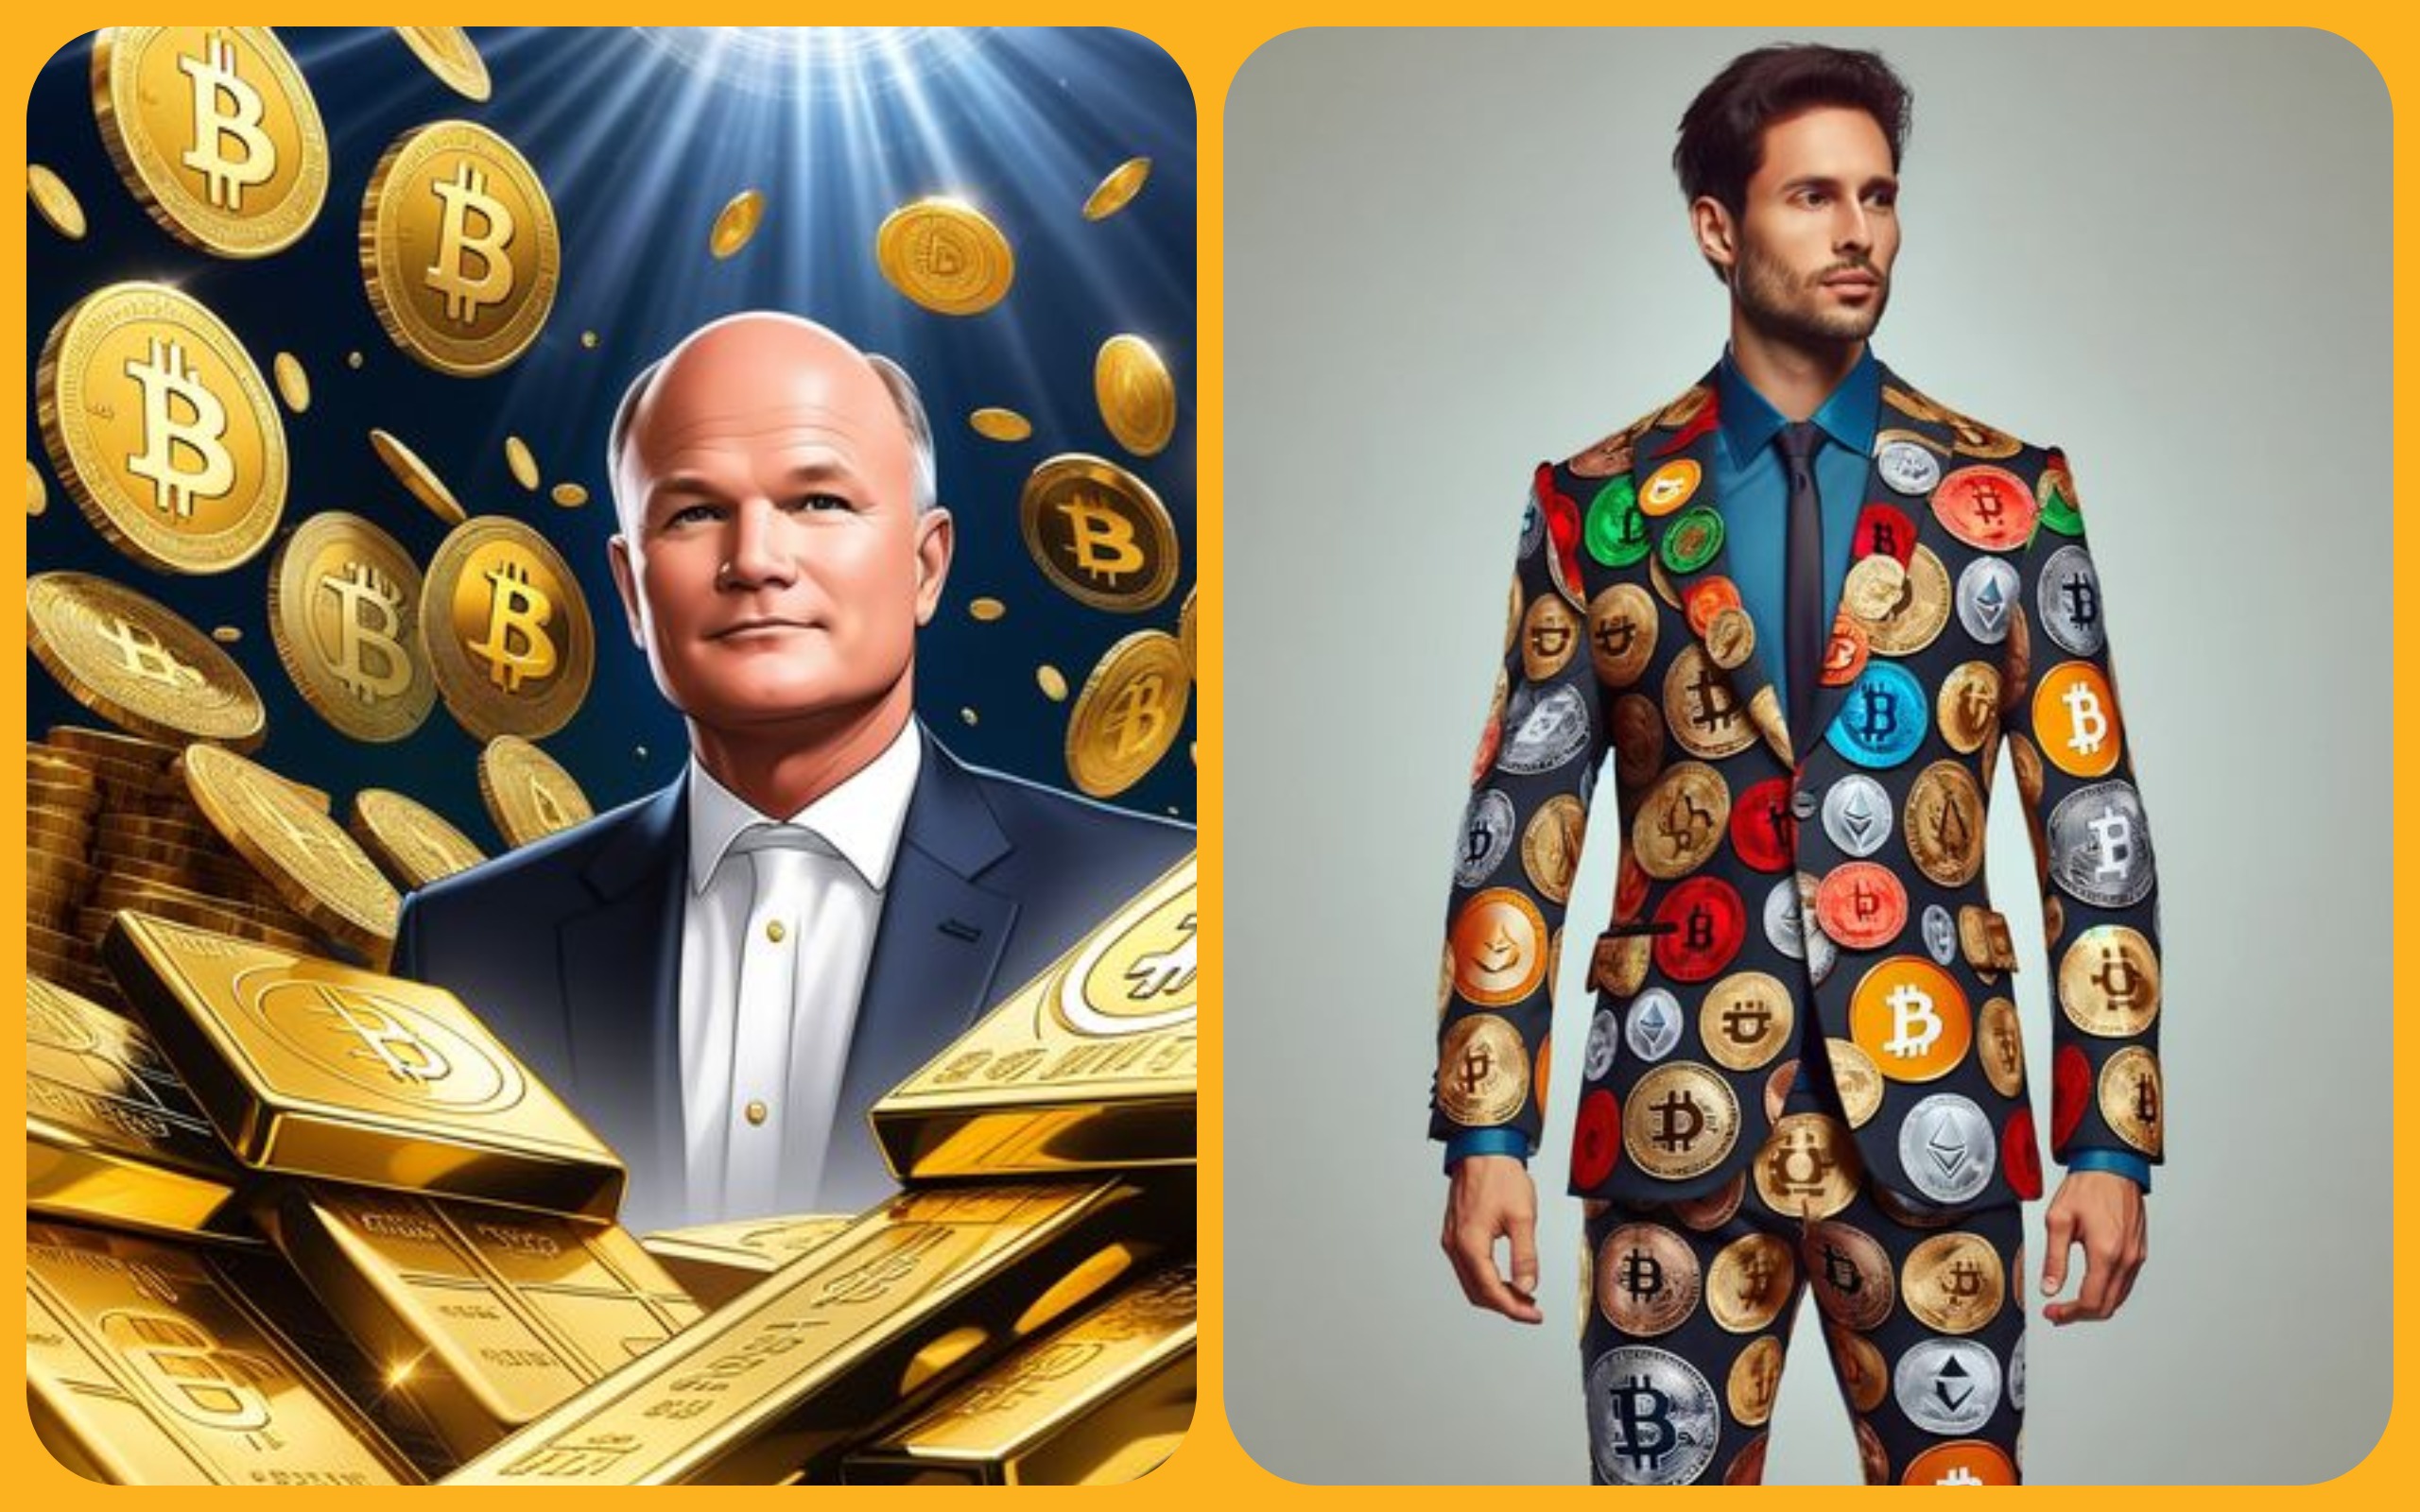 Bitcoin Billionaire: Dream or Reality? 